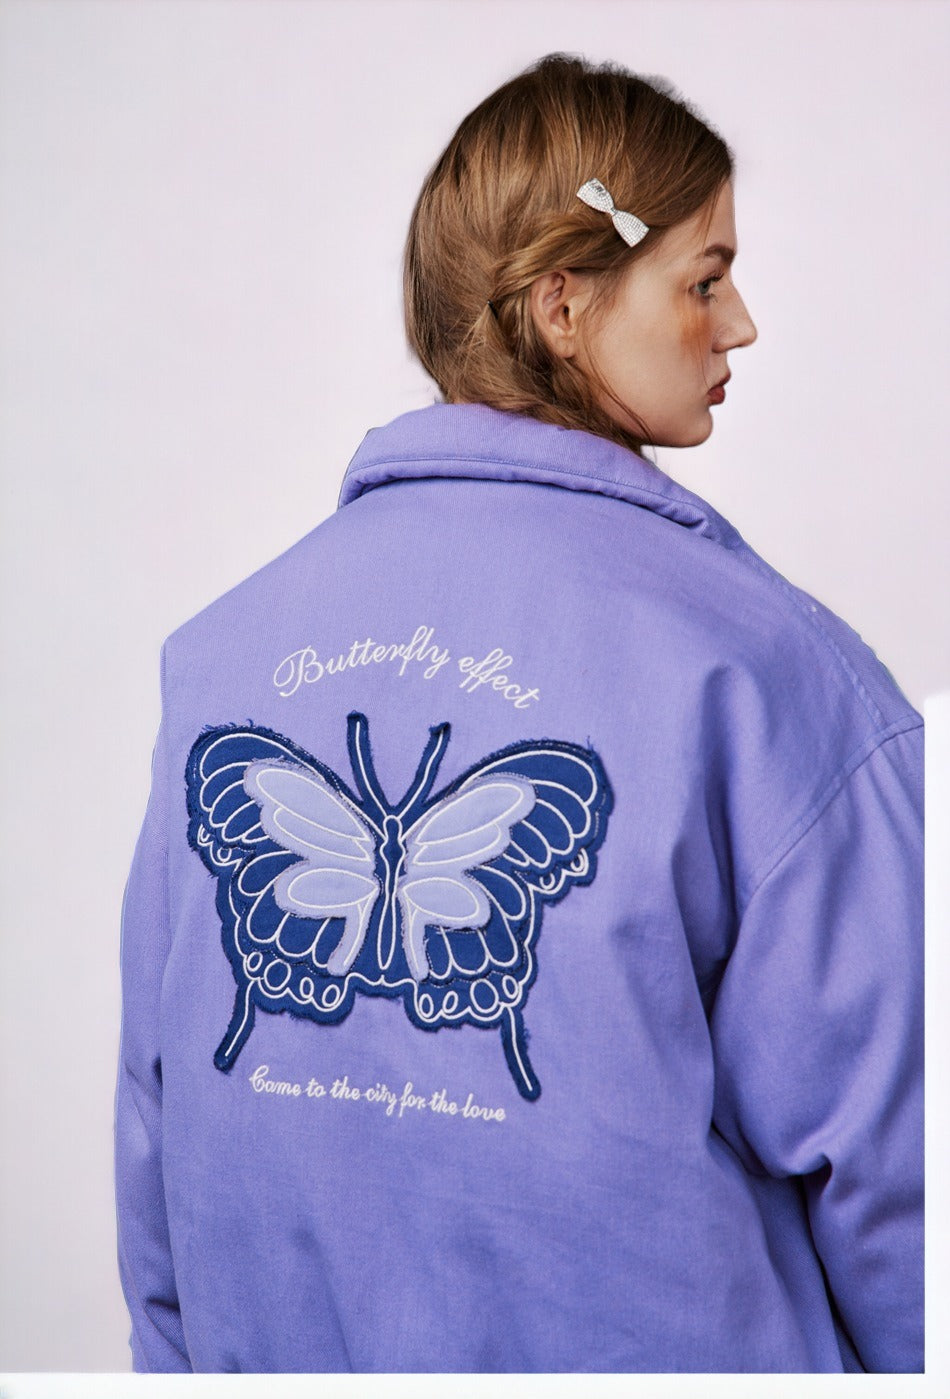 Butterfly collar jacket EZ060